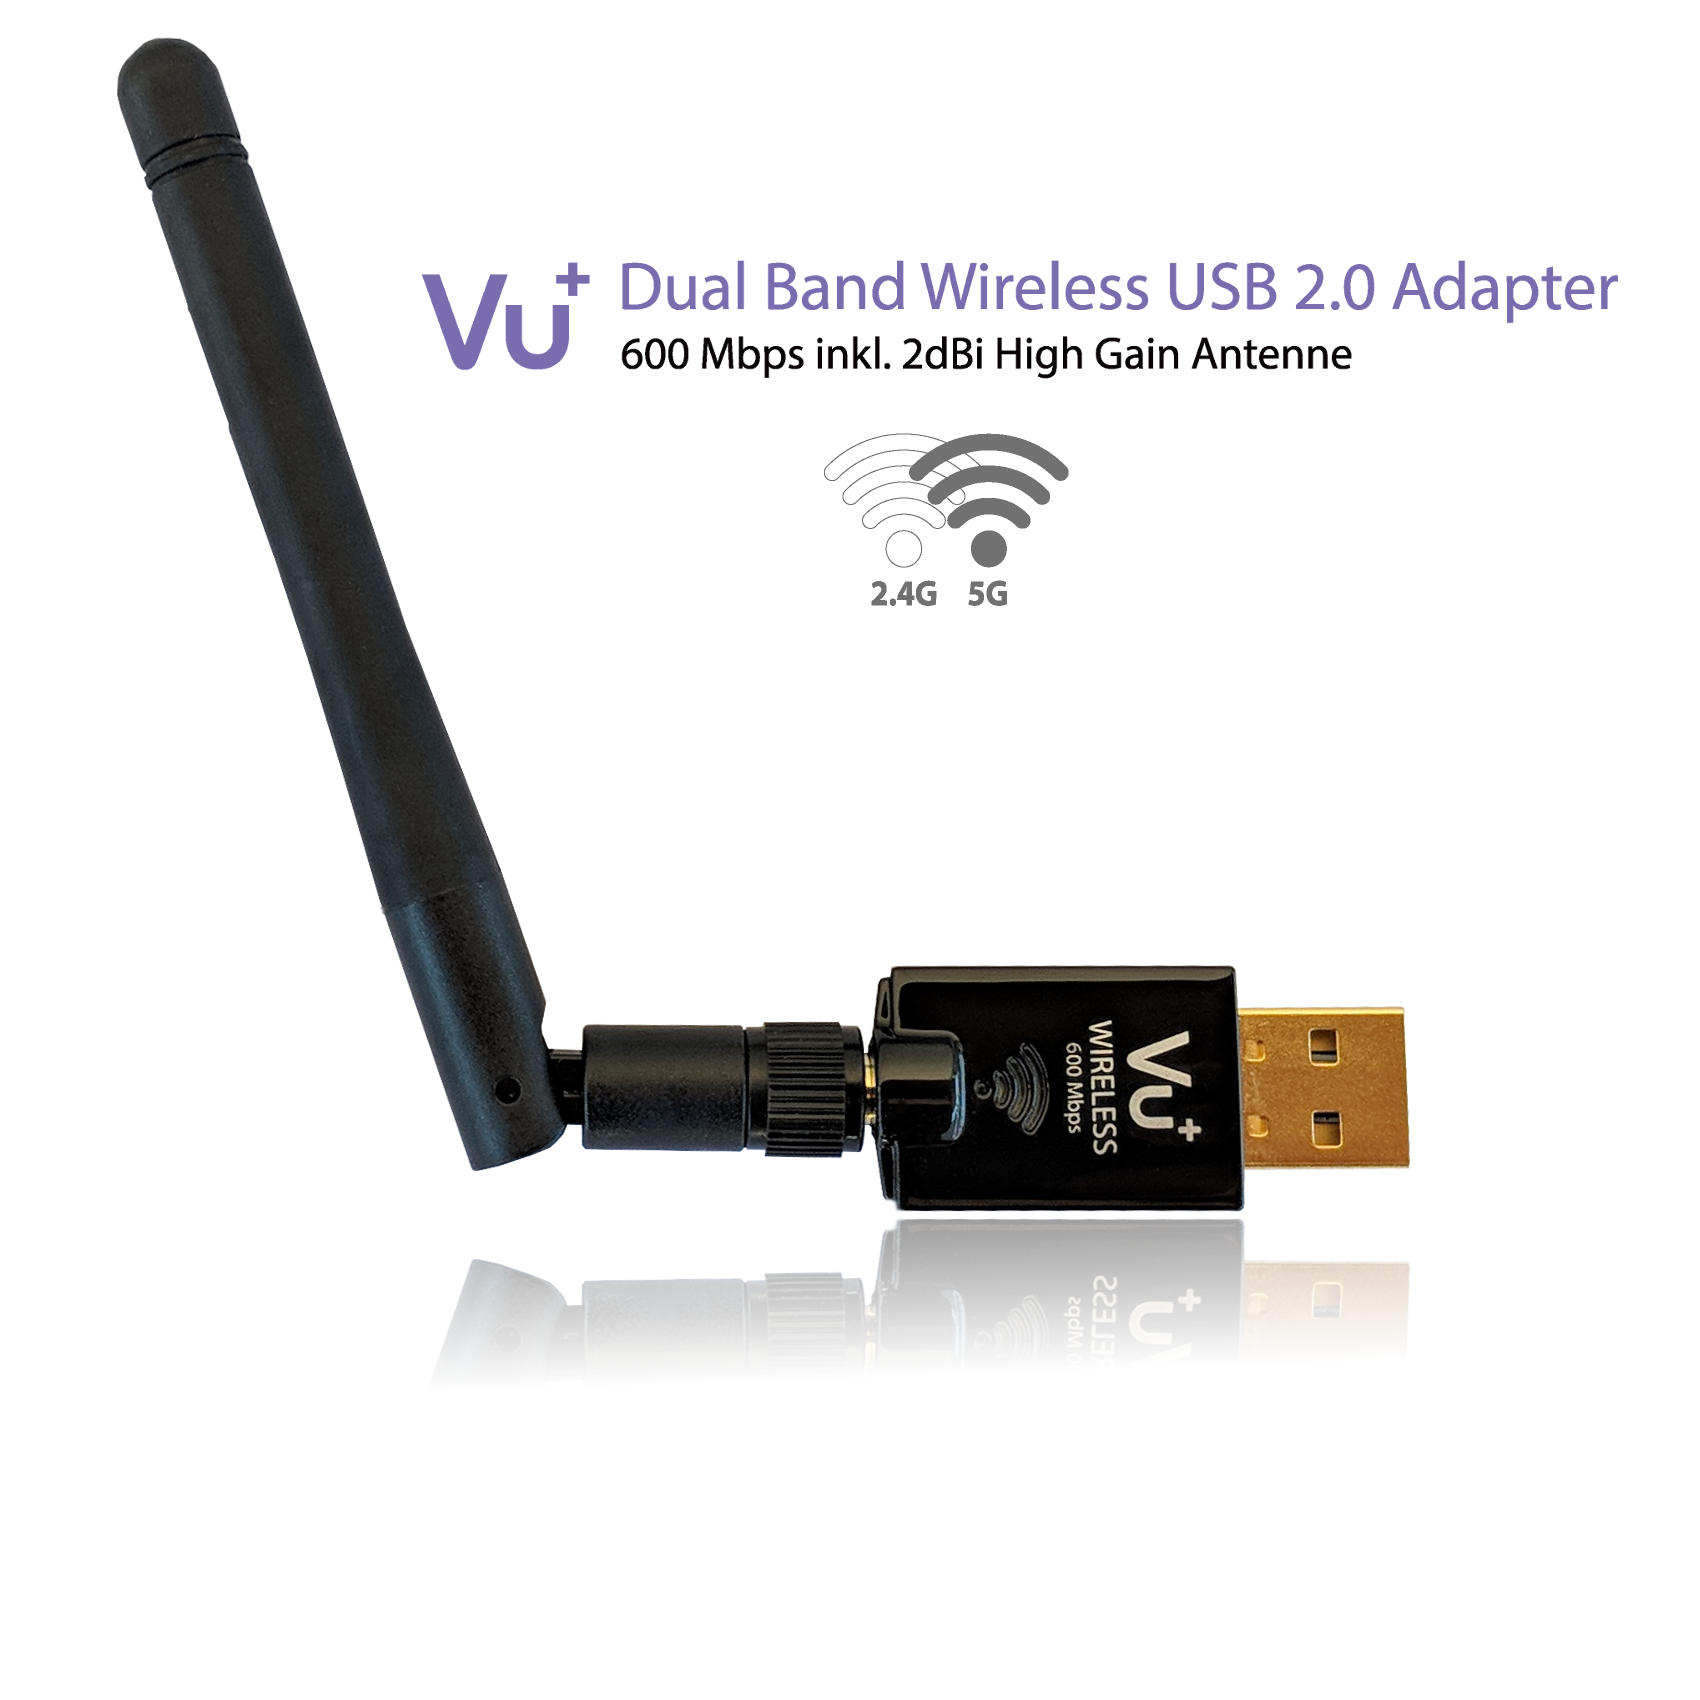 VU+® Dual Band Wireless USB 2.0 Adapter 600 Mbps inkl. Antenne